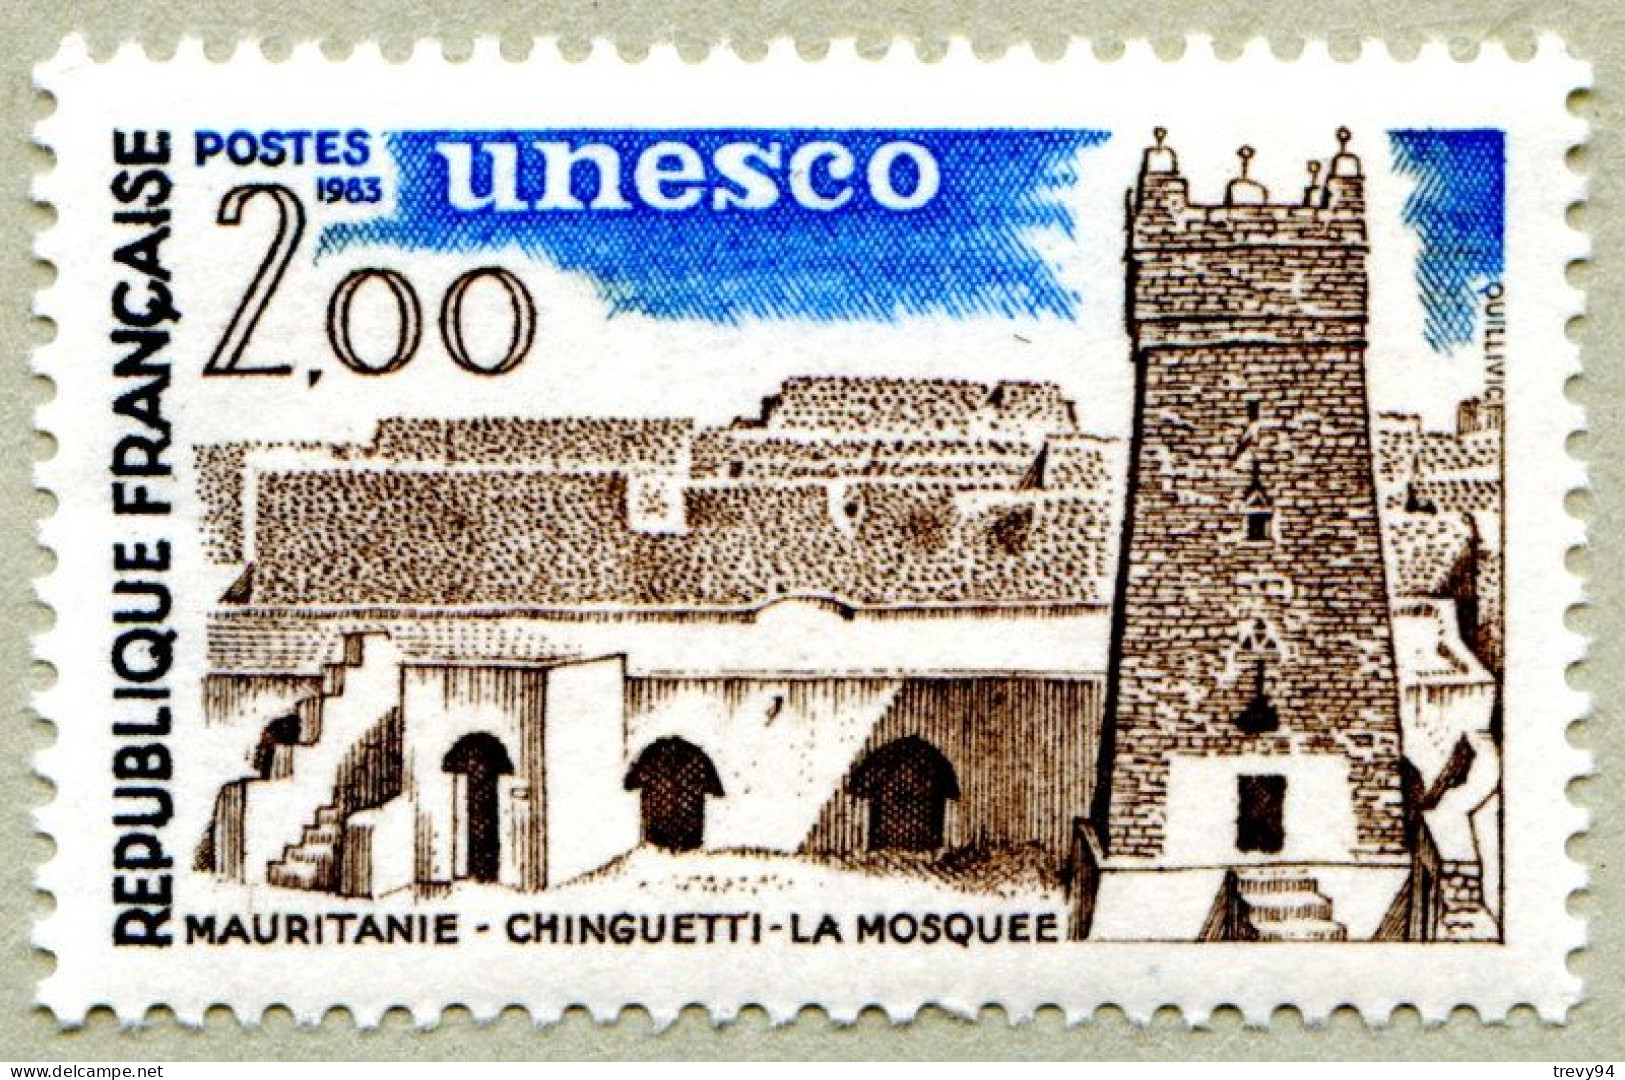 Timbre De Service 1983 - UNESCO Mauritanie Chinguetti - La Mosquée - N° 75 Neuf - Neufs